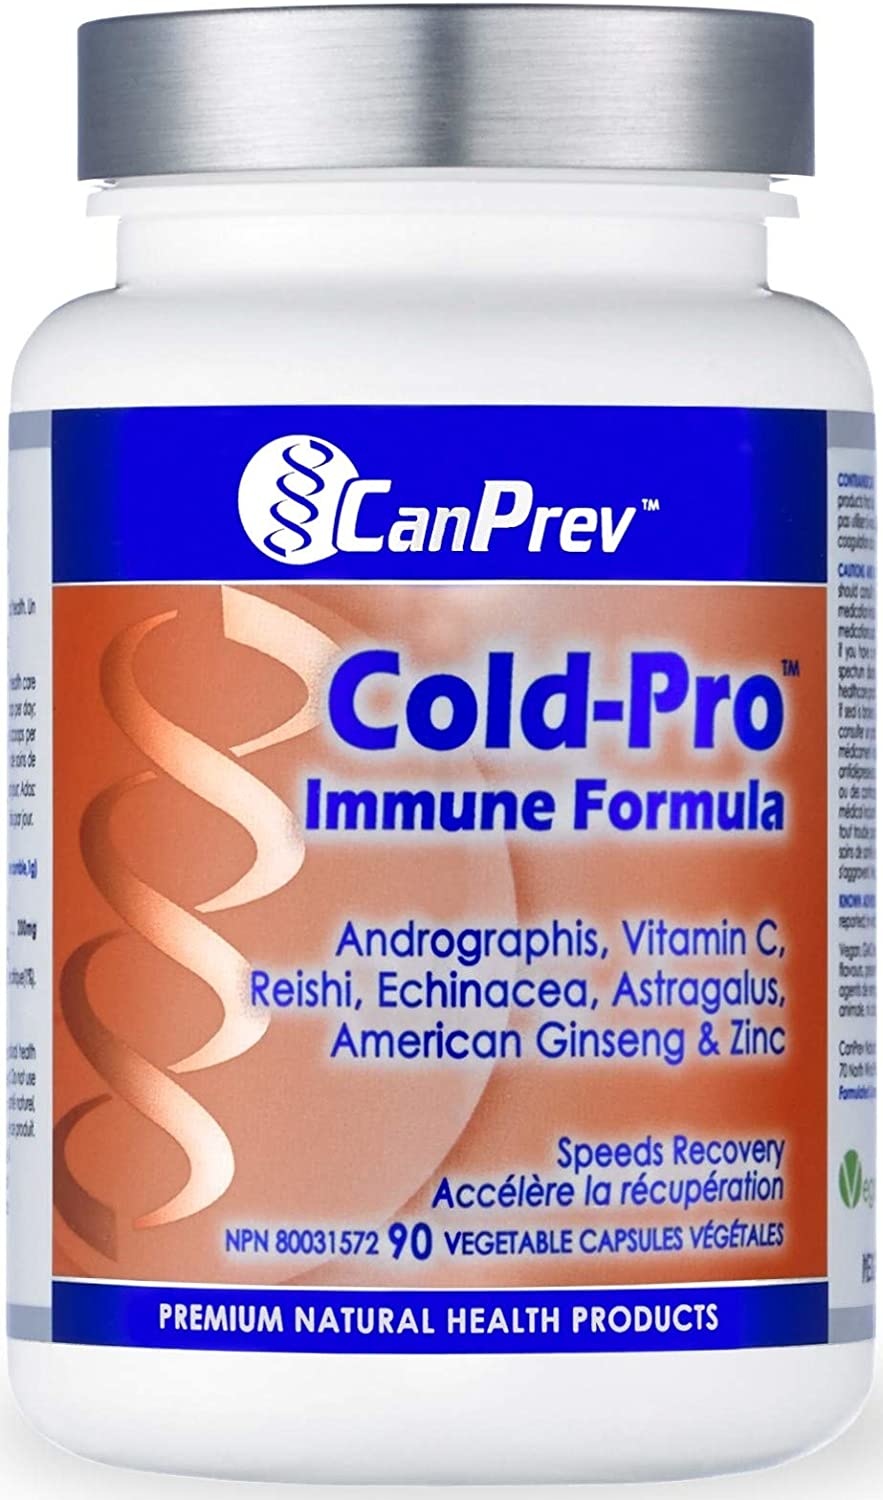 CanPrev CanPrev - Cold-Pro Immune Formula, 90 vegetable capsules